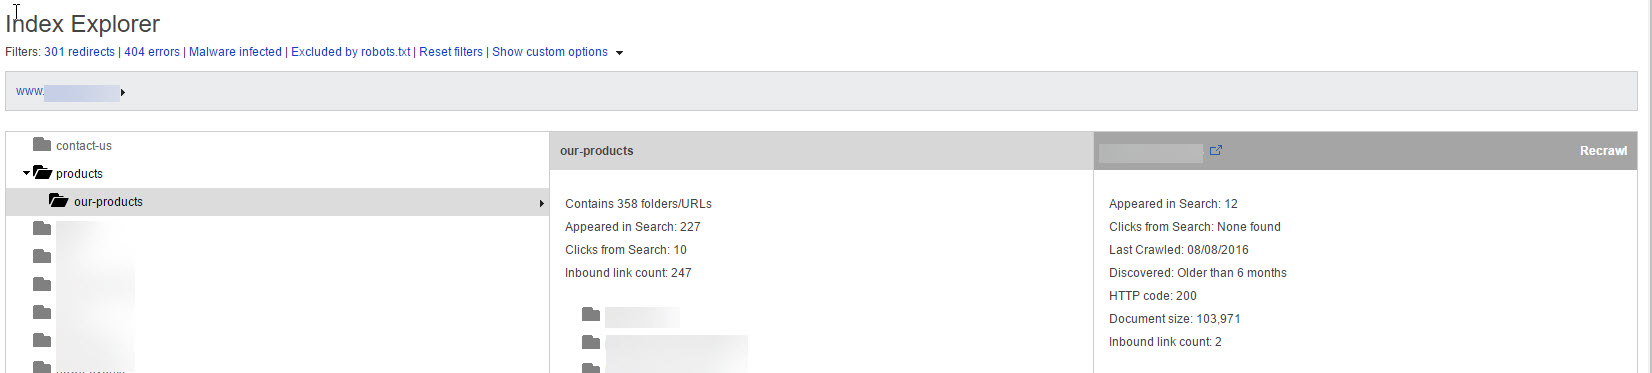 Bing Webmaster Tools Index